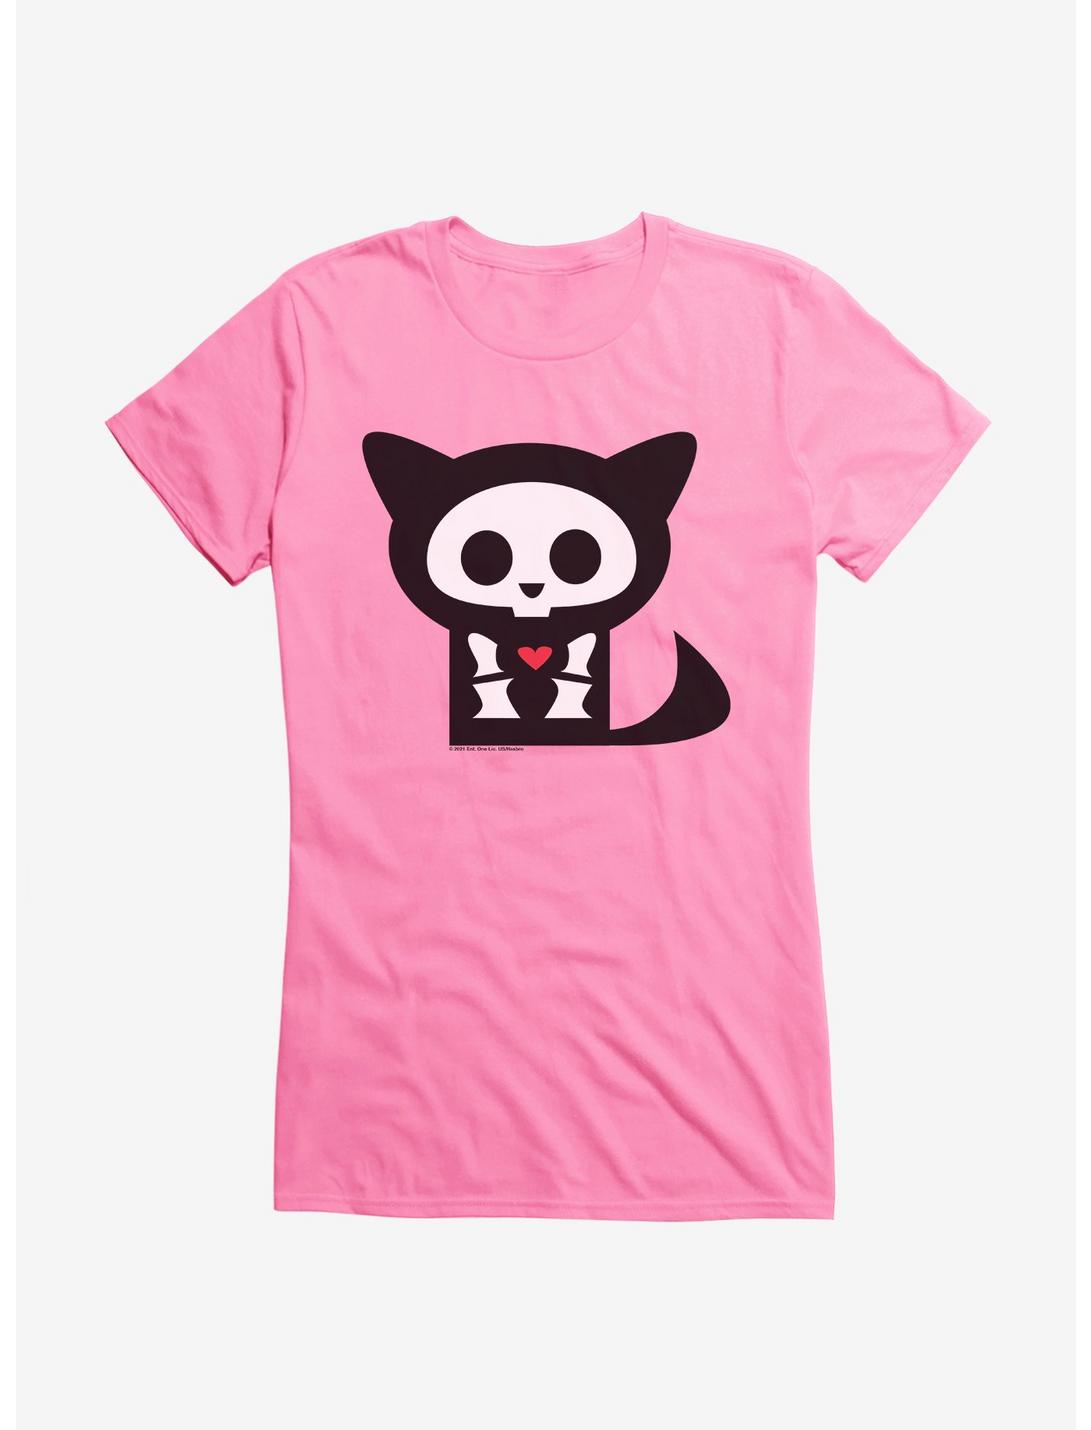 Skelanimals Kit The Cat Girls T-Shirt, , hi-res